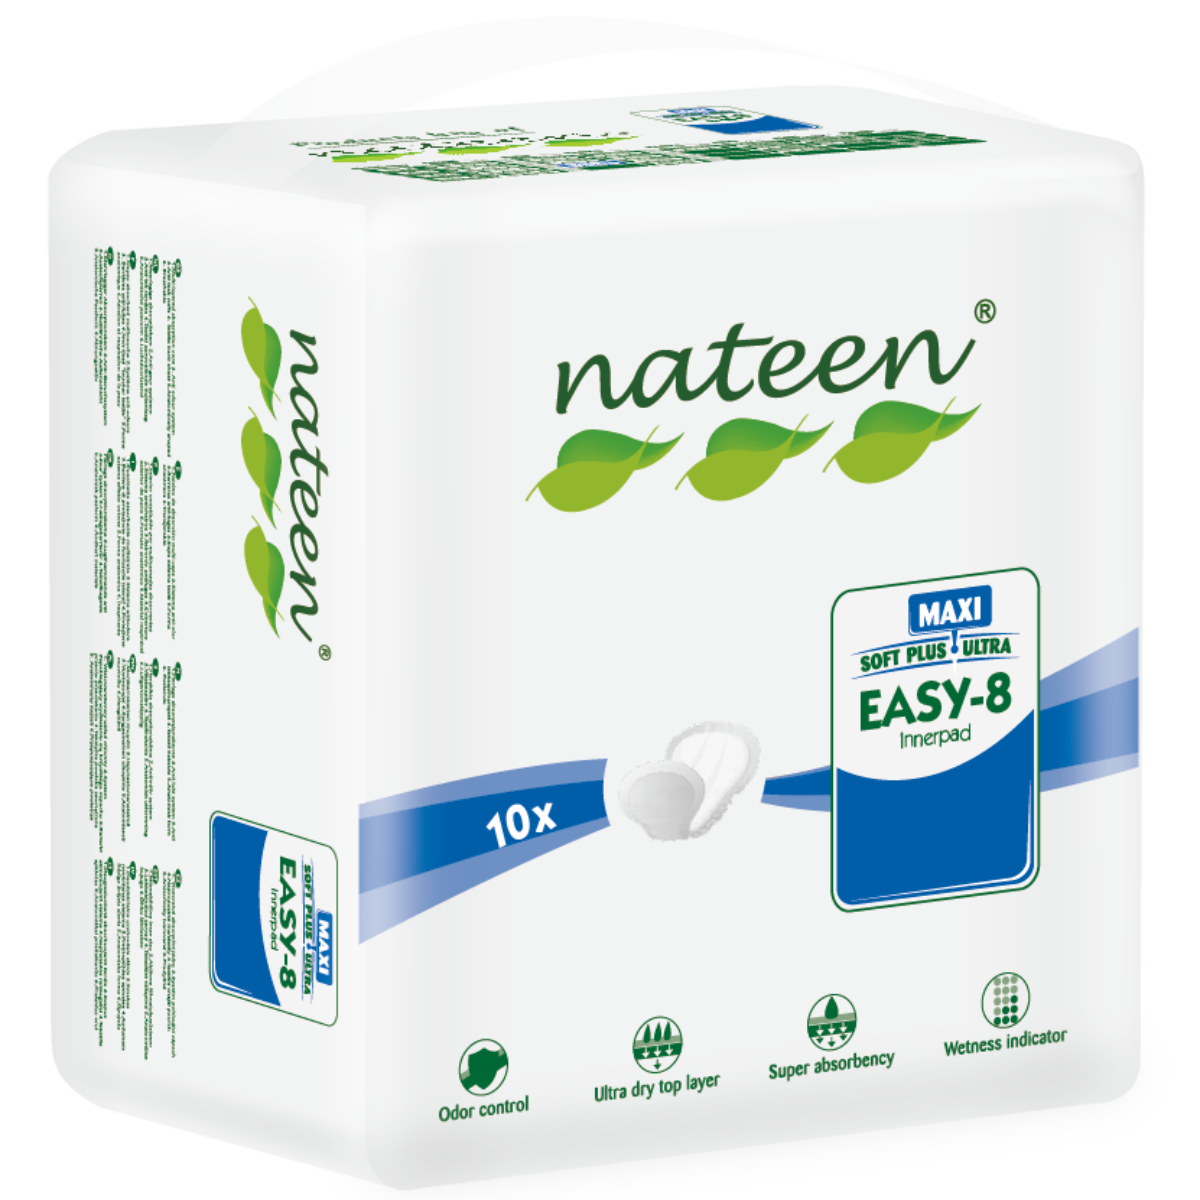 Nateen Easy-8 Maxi 2450 ml unisex pads